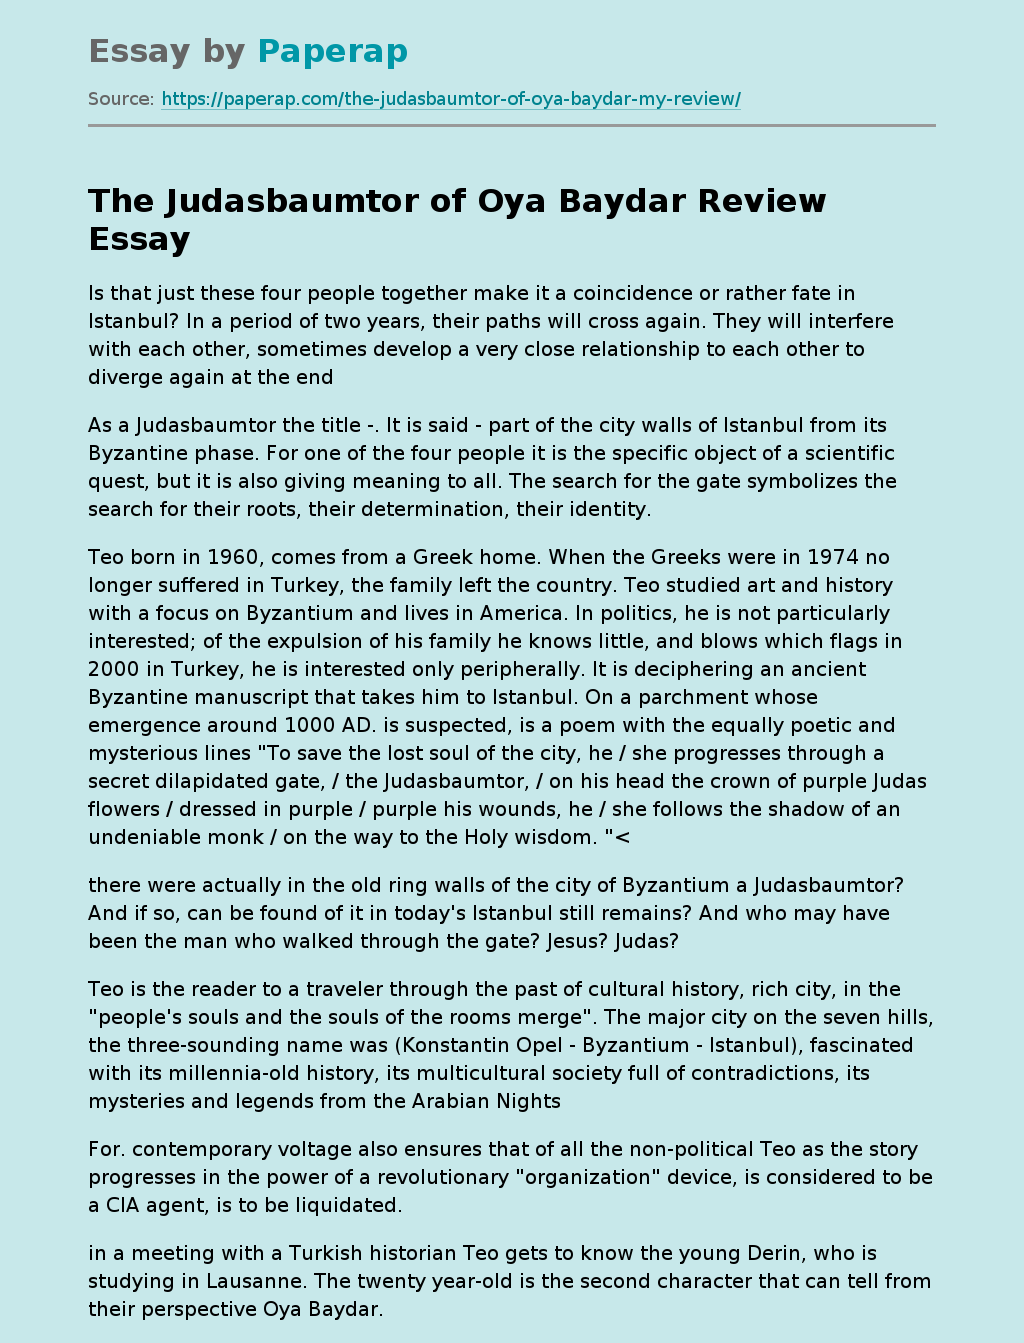 The Judasbaumtor of Oya Baydar Review